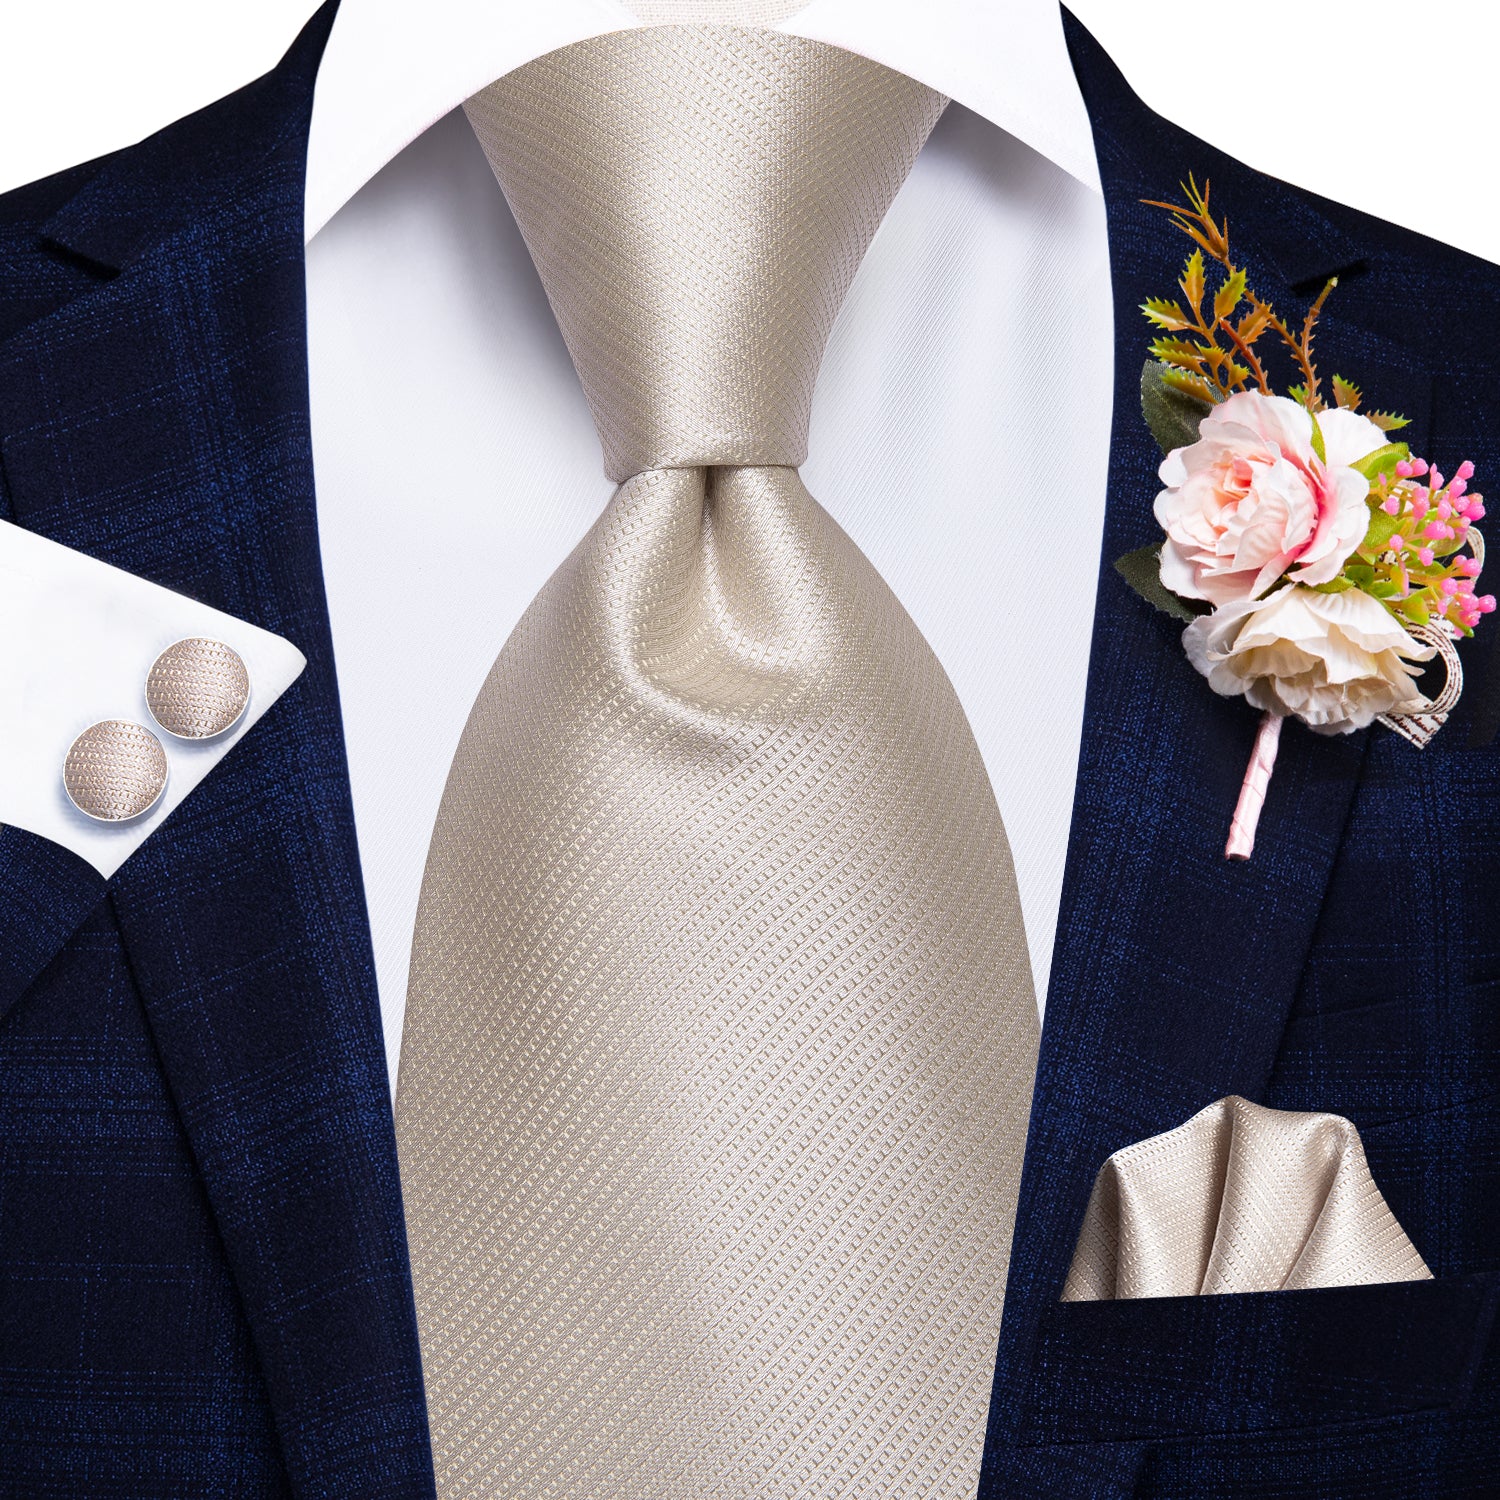 Lvory Beige Solid Tie Handkerchief Cufflinks Set with Wedding Brooch